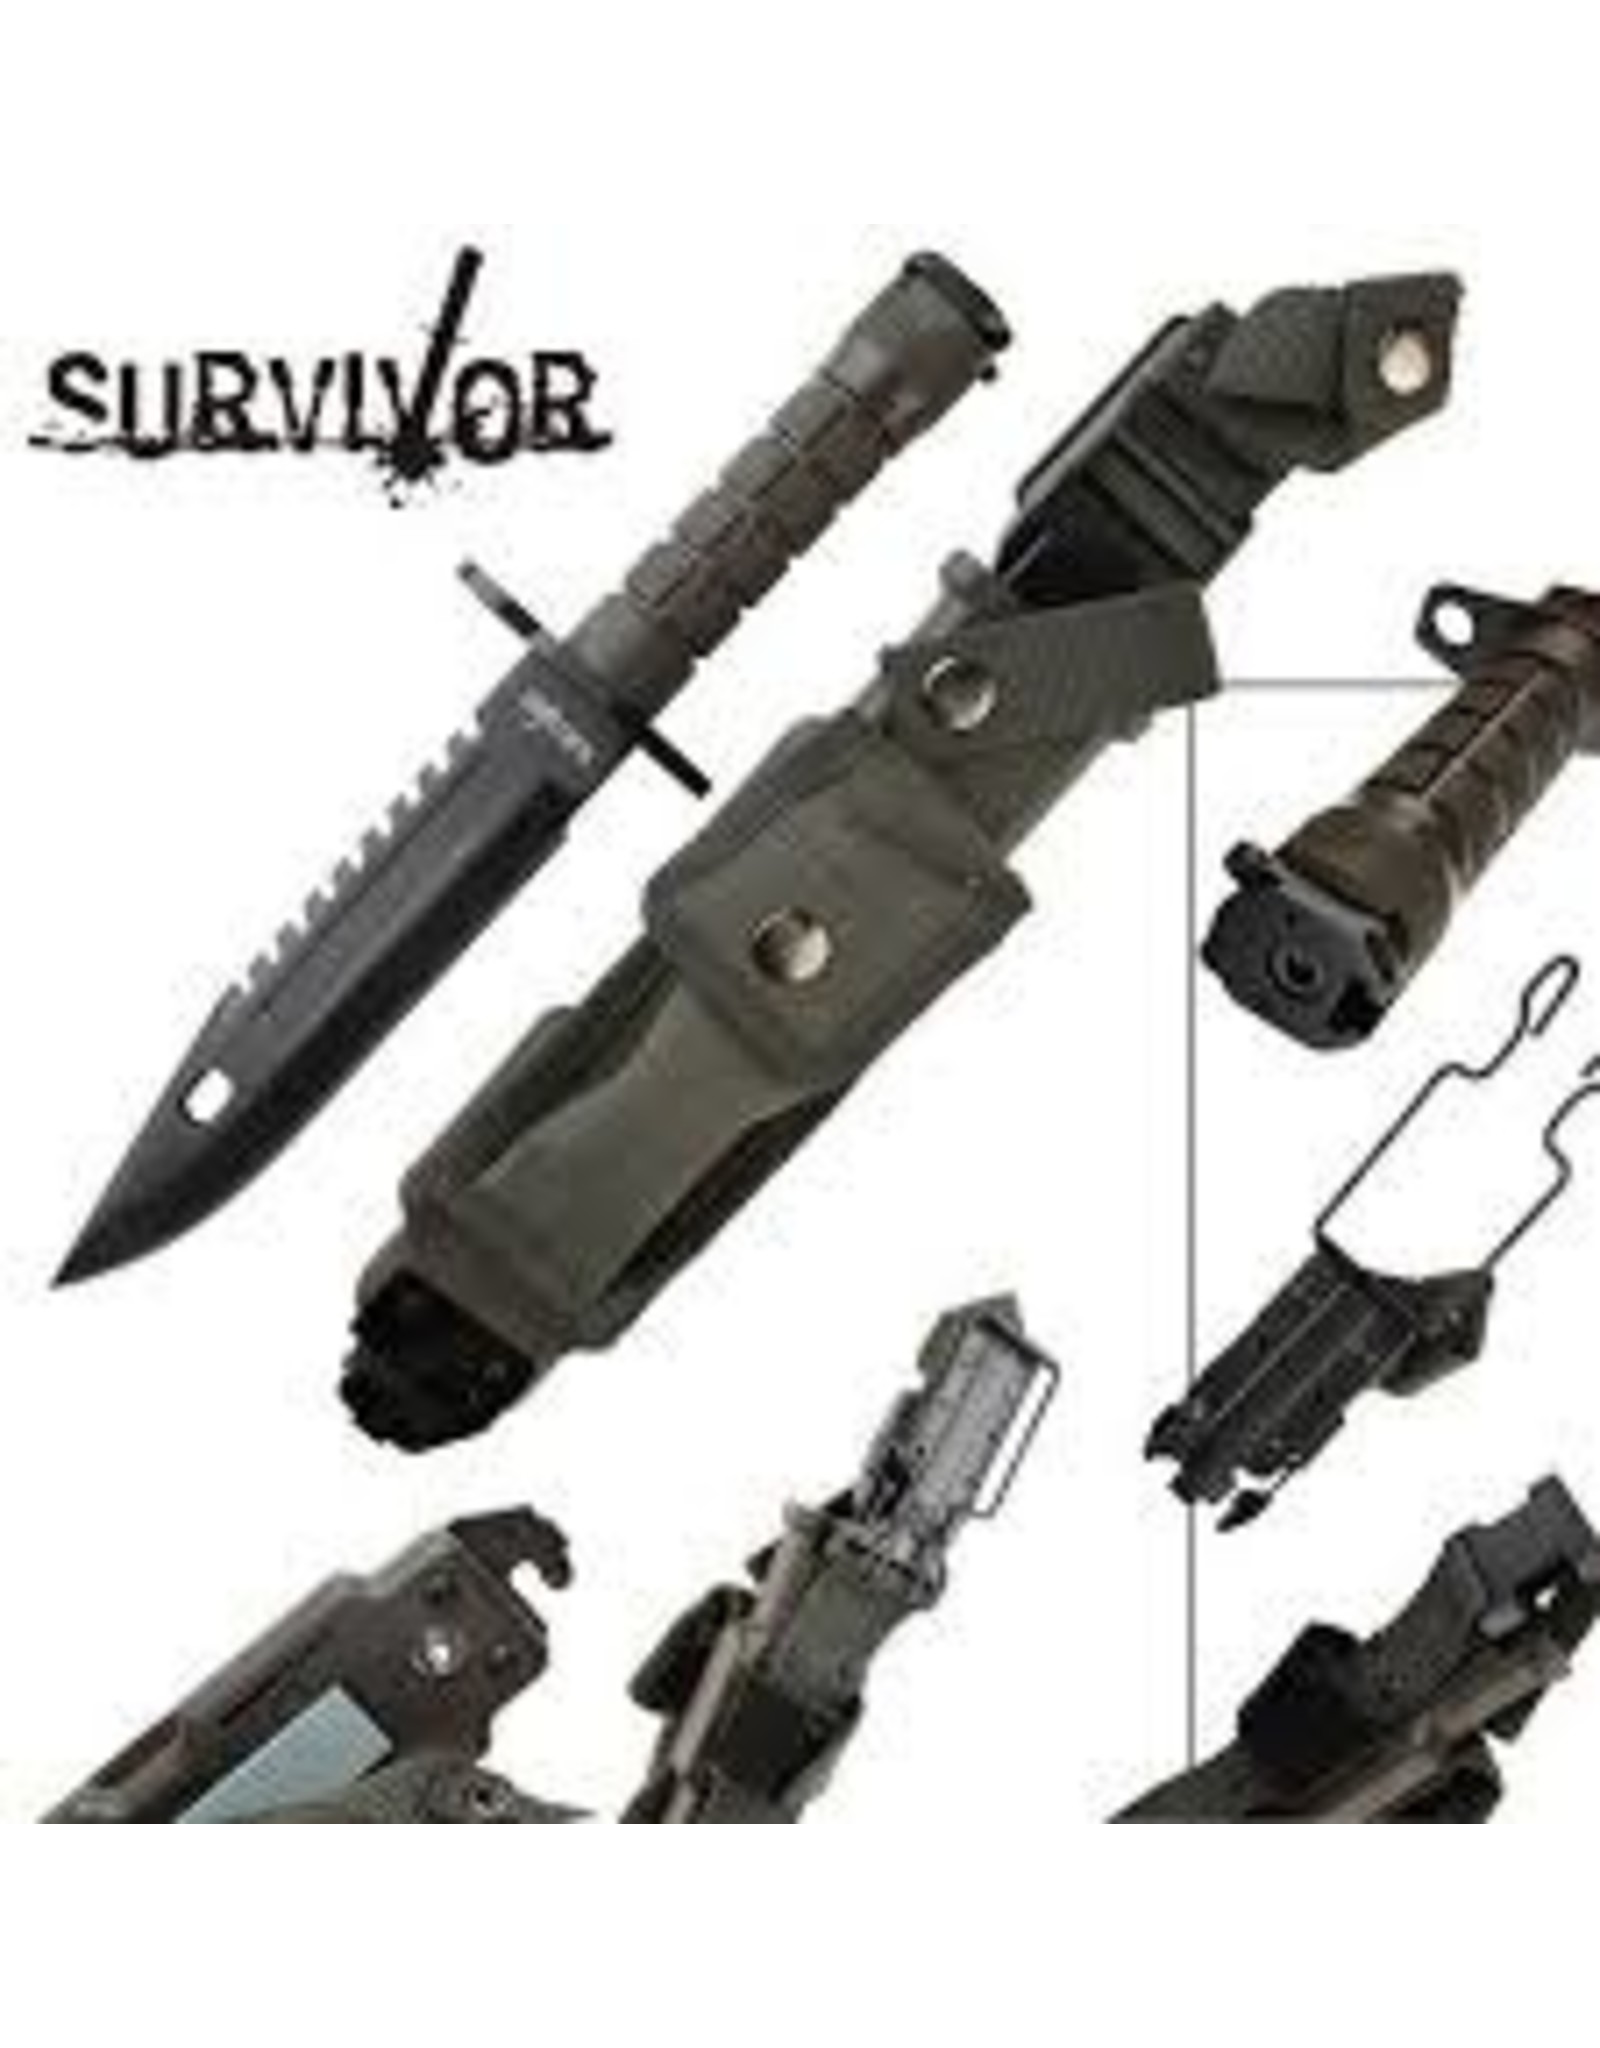 Red Deer Outdoors 14 Inch Jungle Survival Knife Black Survival Kit Free Case